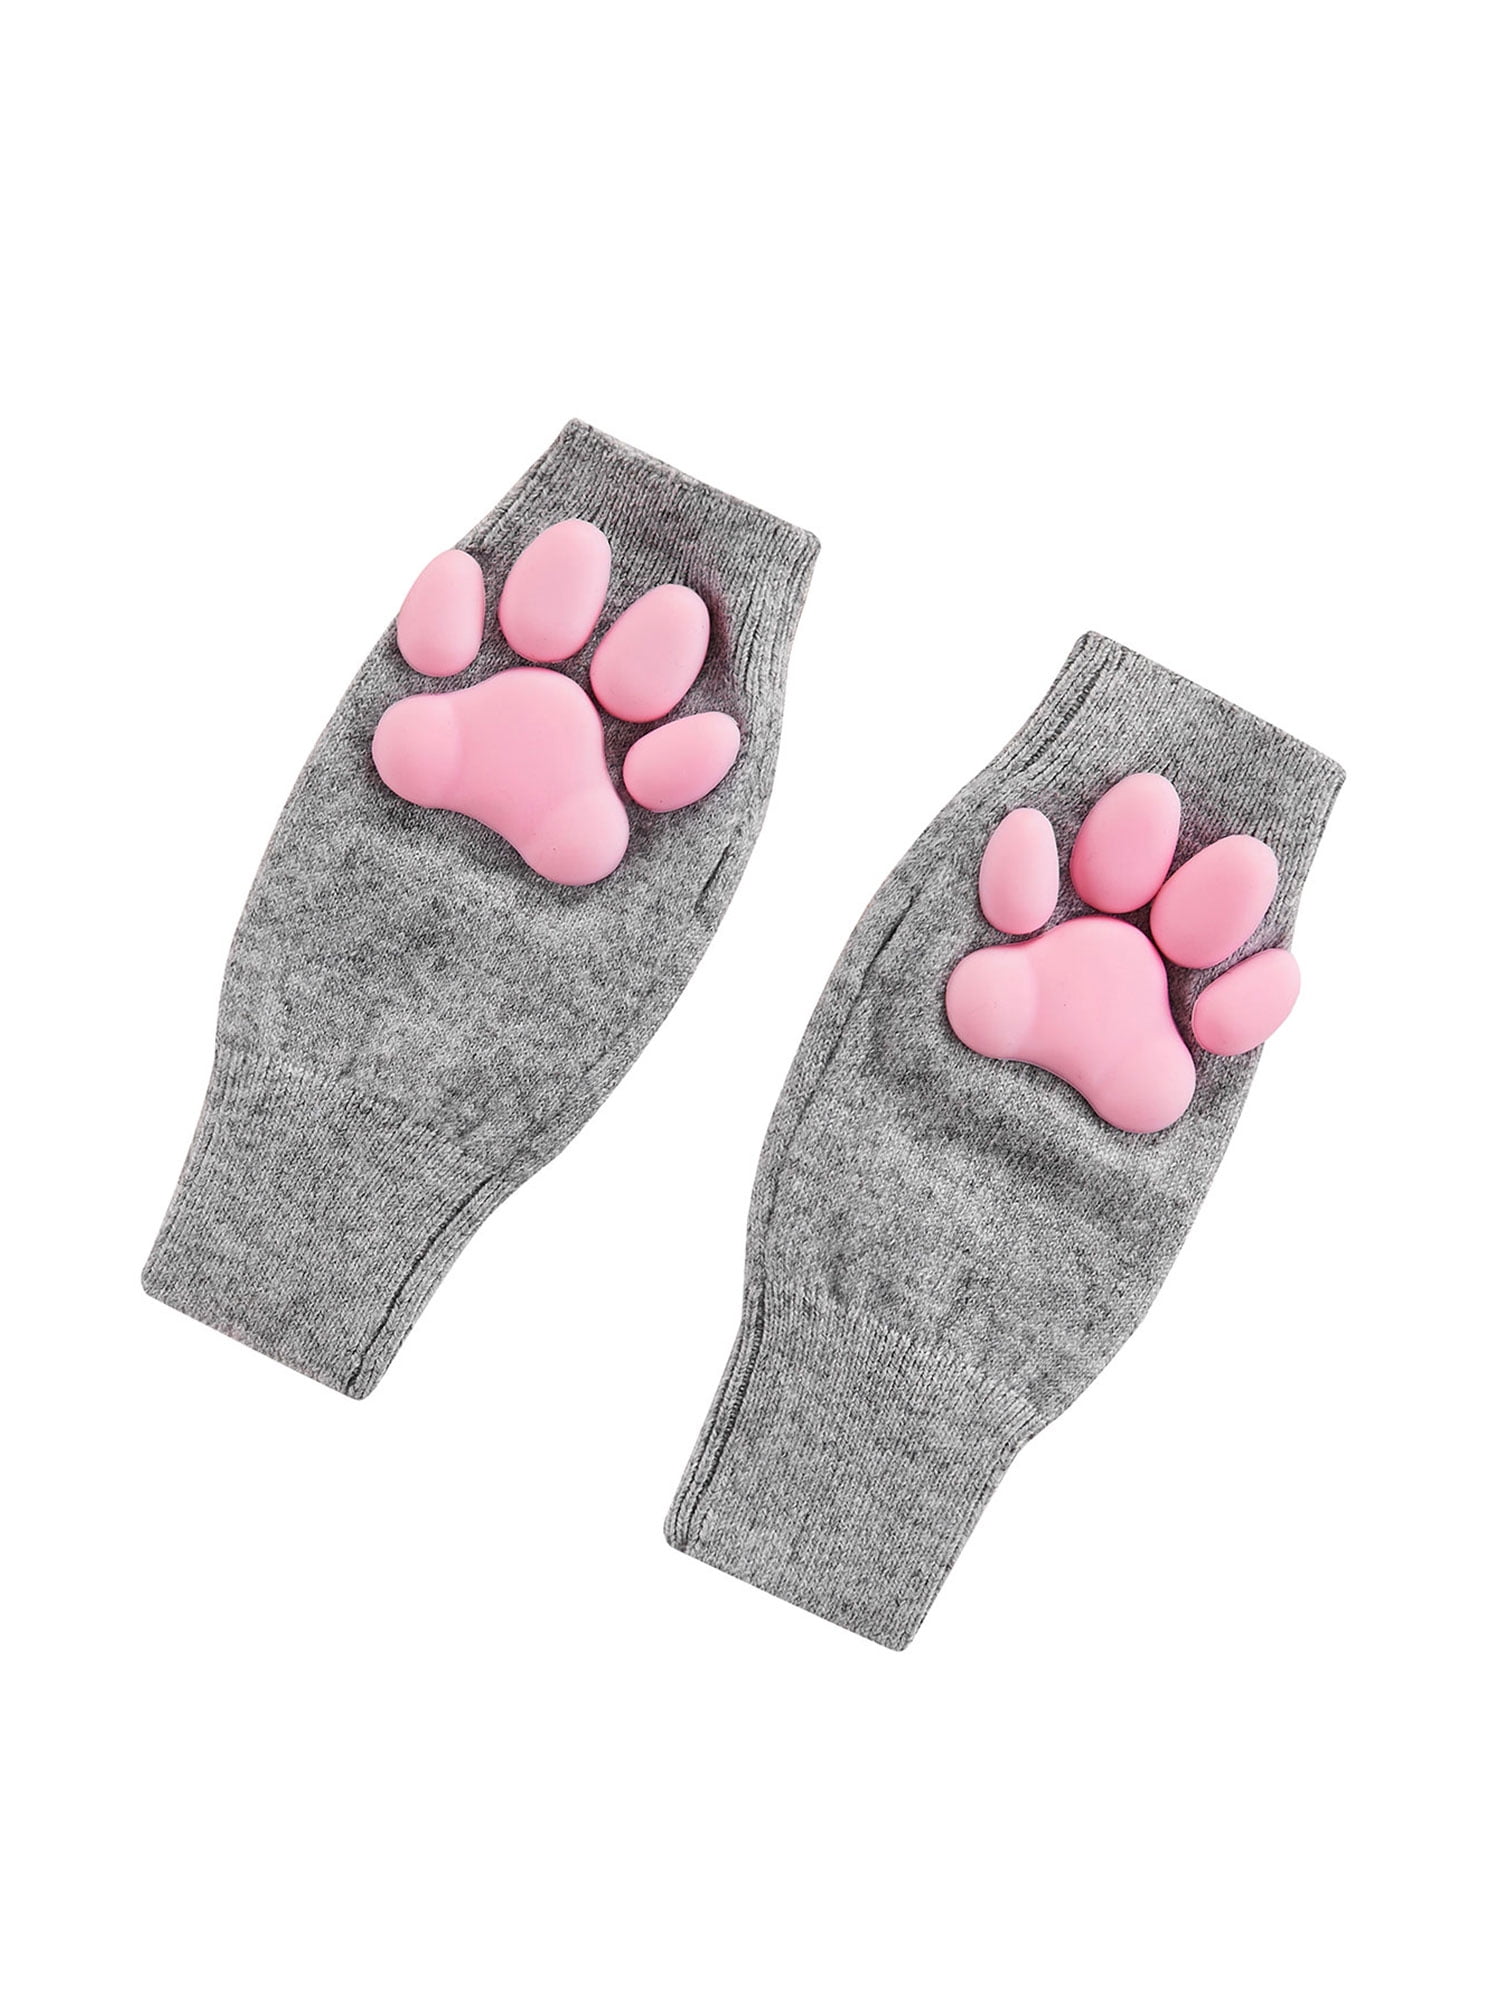 New Women Ladies Fingerless Fur Winter Warm Bear's Paw Mitten Gloves 